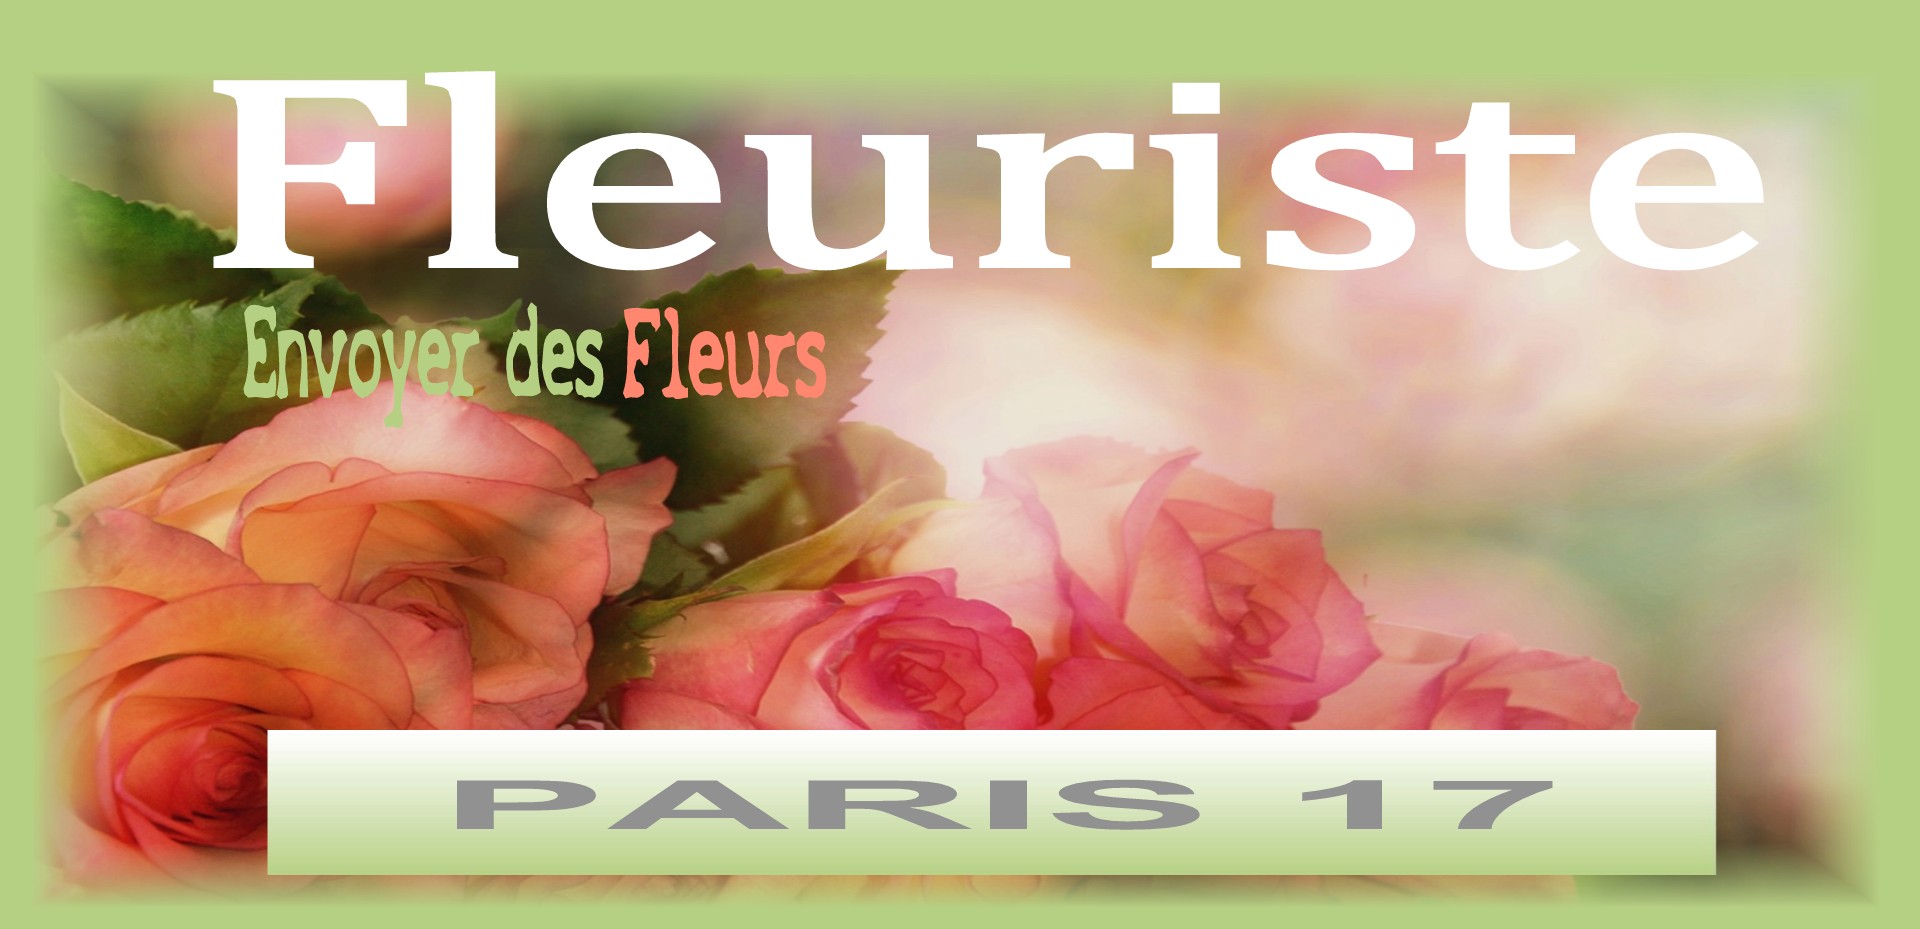 FLEURISTE PARIS 17